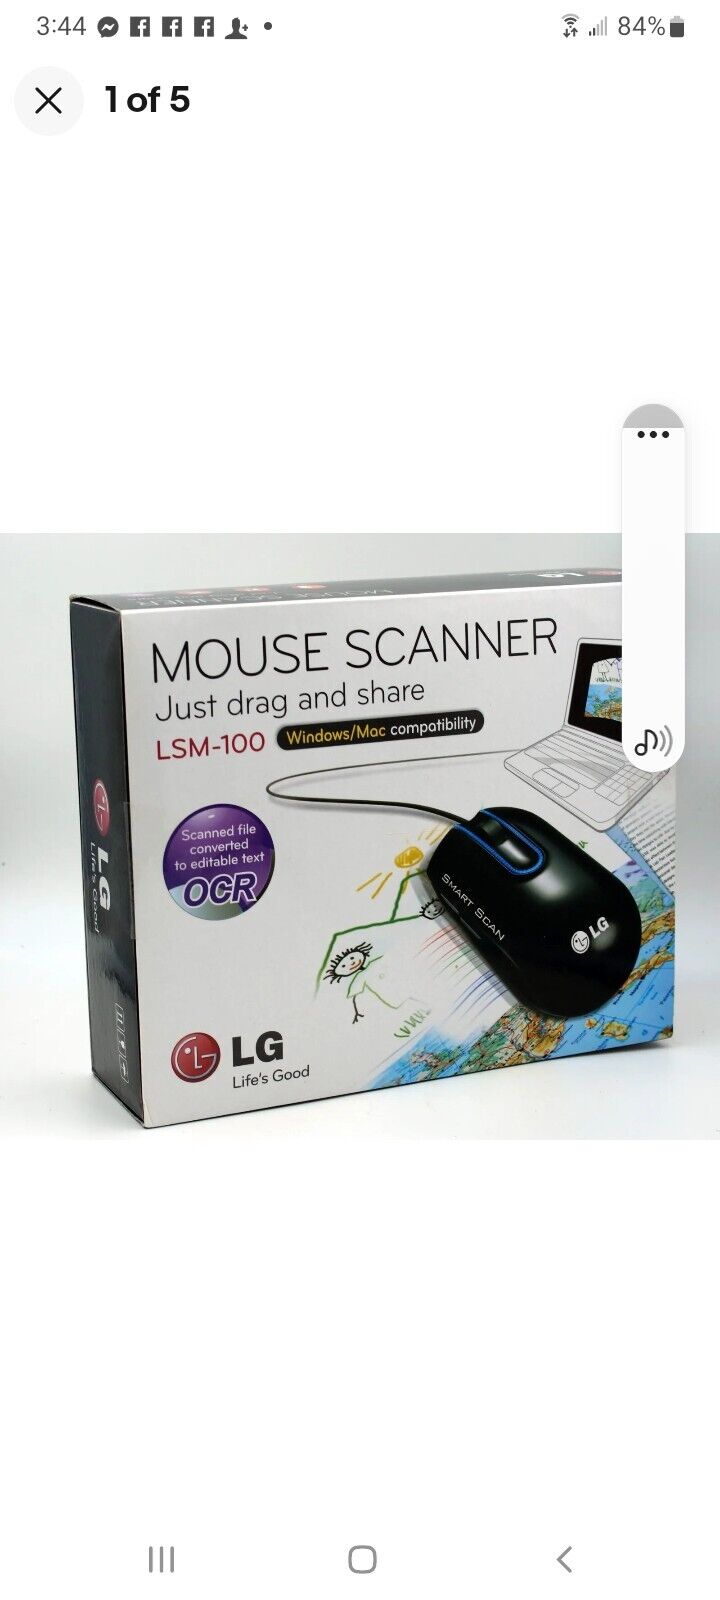 LSM-100 MOUSE SCANNER LG SMART SCAN - NEW - Windows Pc Mac Compatible